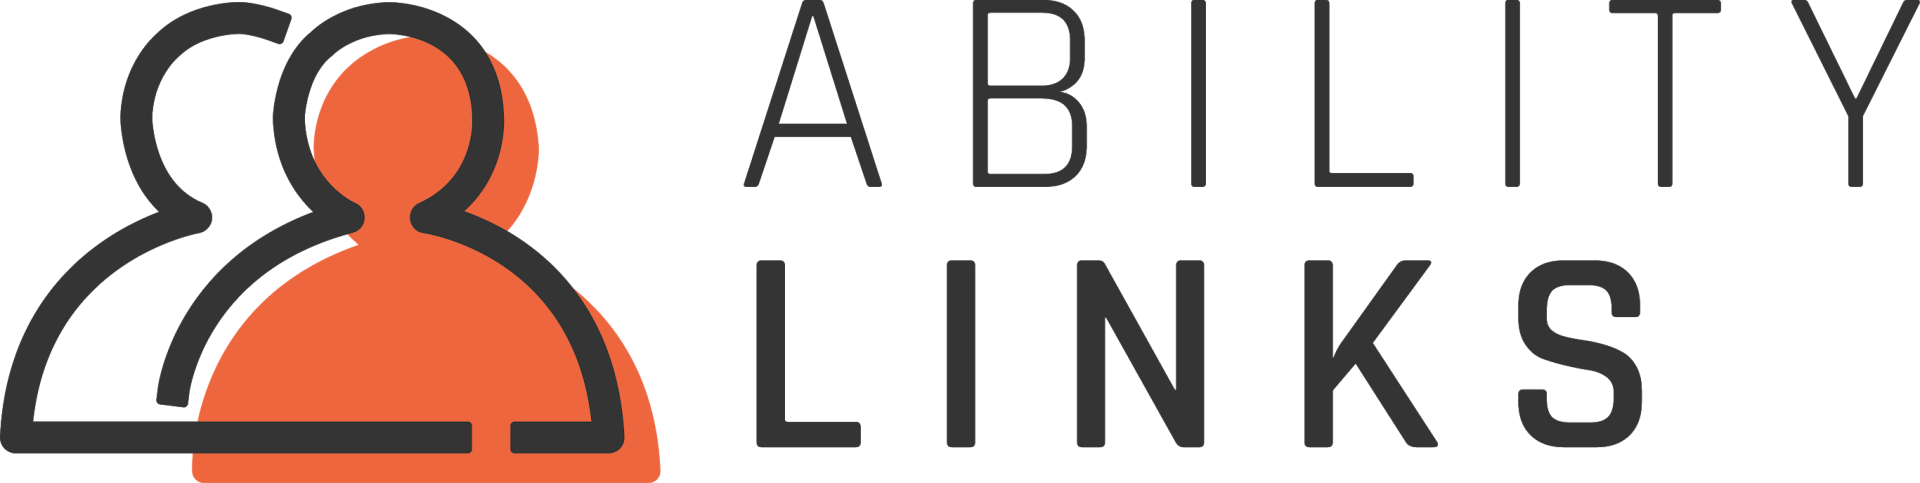 Ability links logo